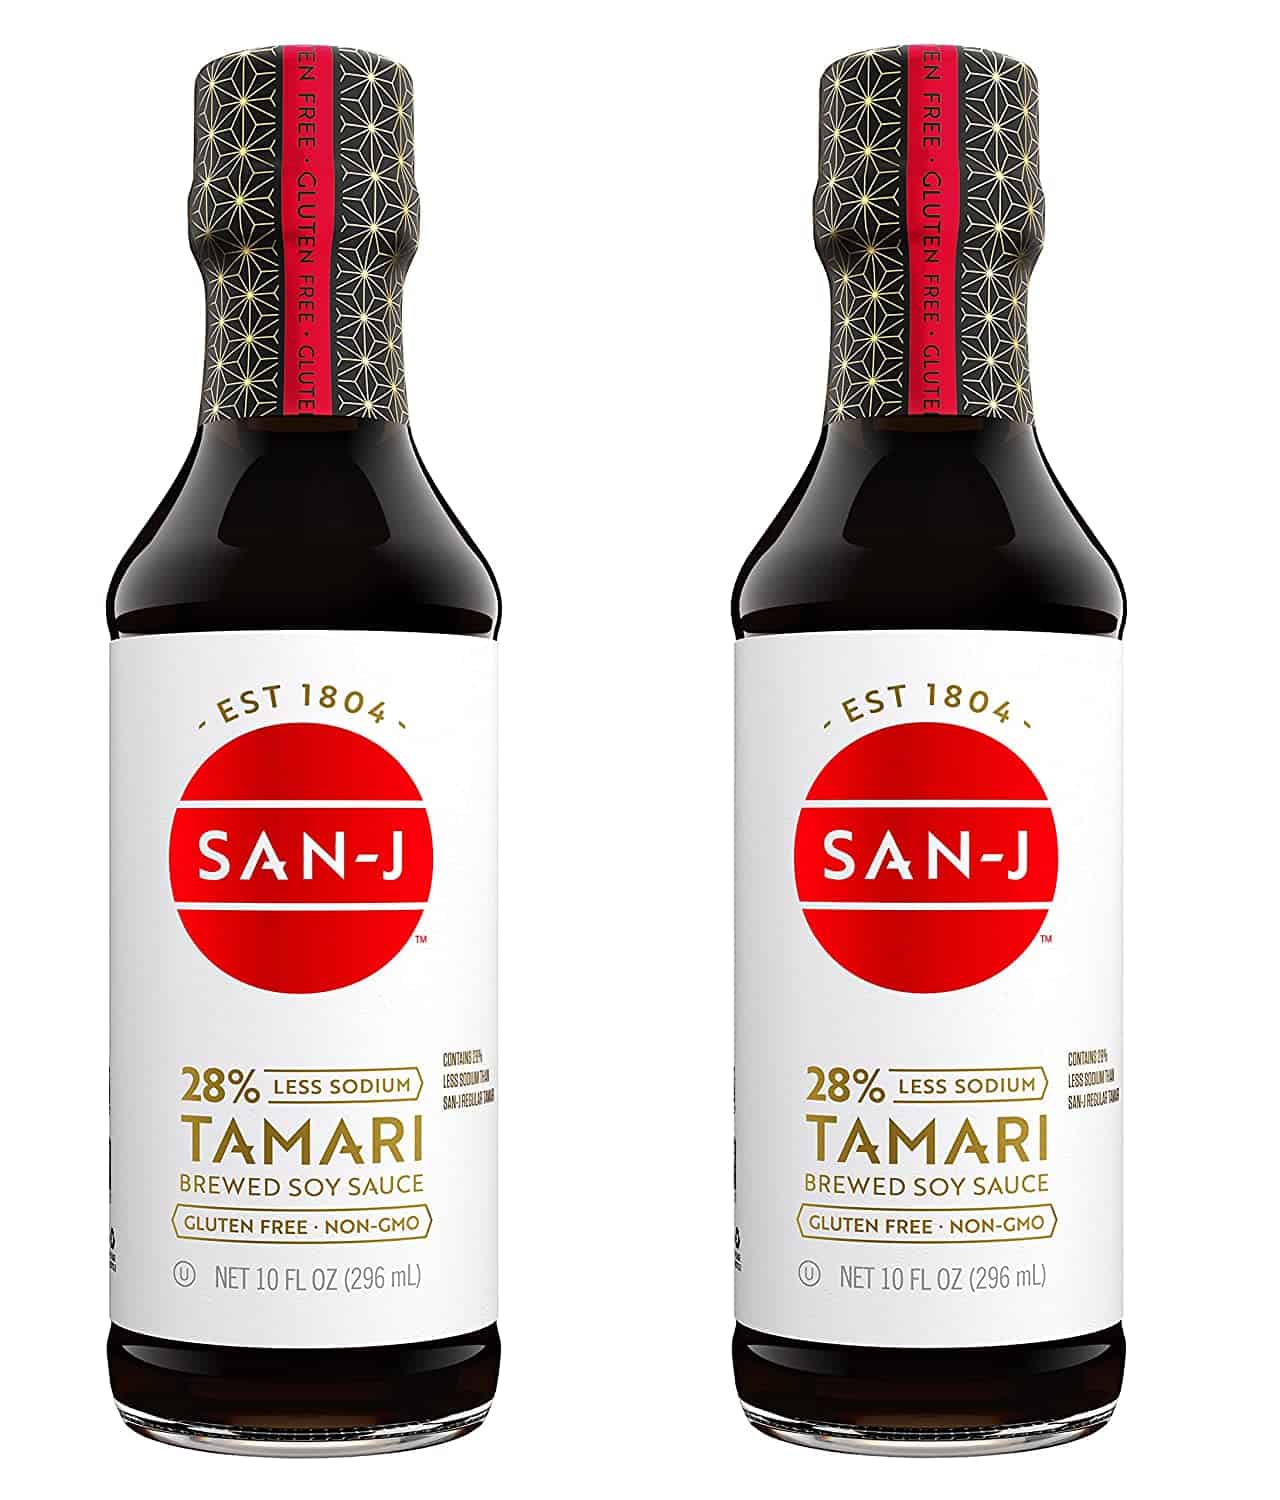 Best tamari soy sauce: San-J Gluten Free Tamari